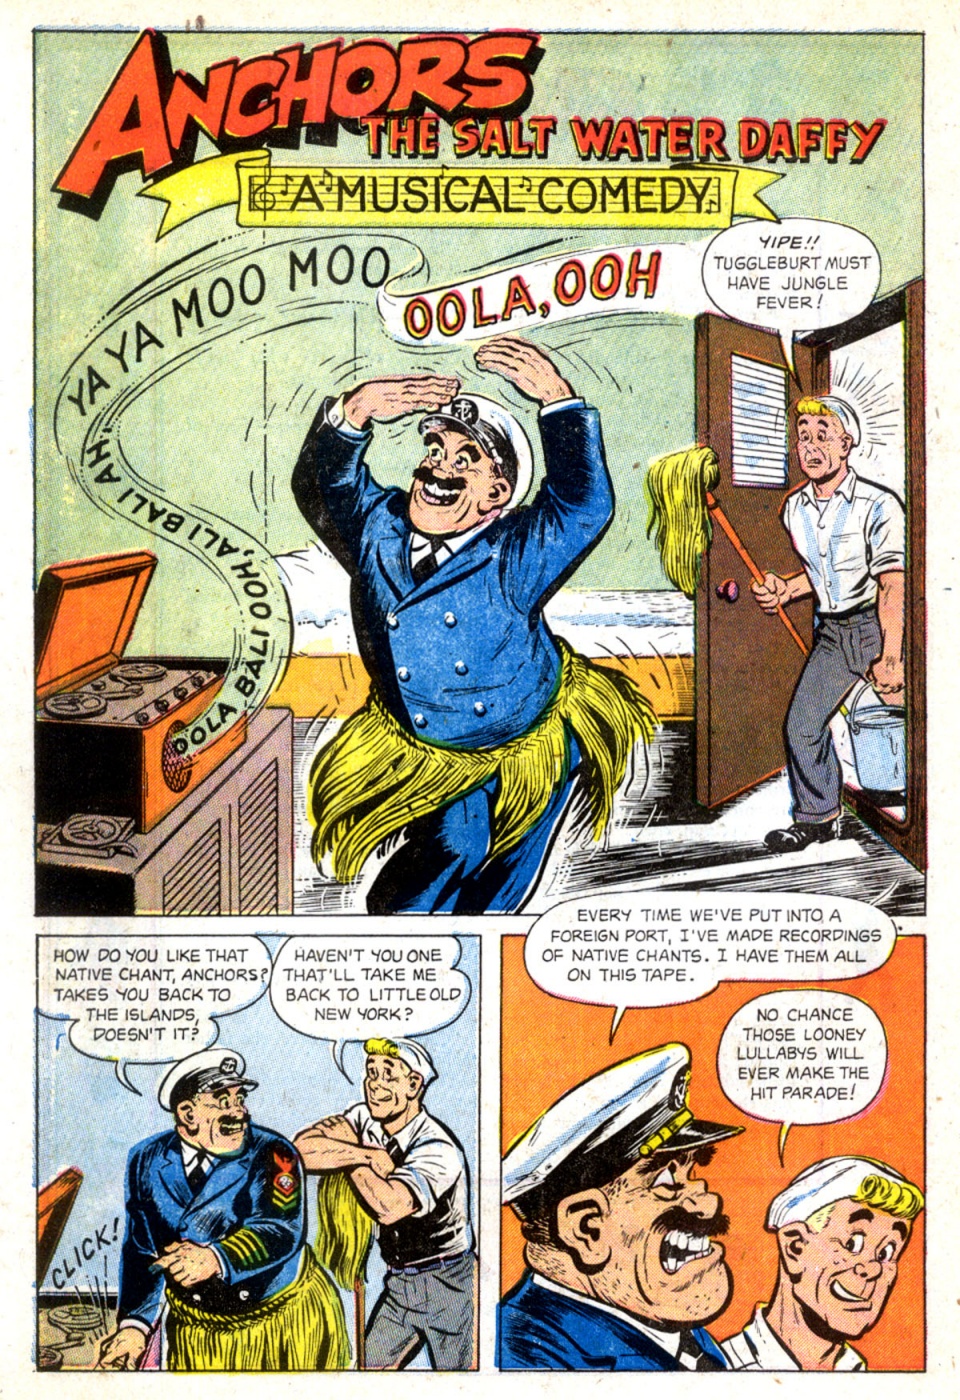 Anchors the Salt Water Daffy - Comics (b) (28)